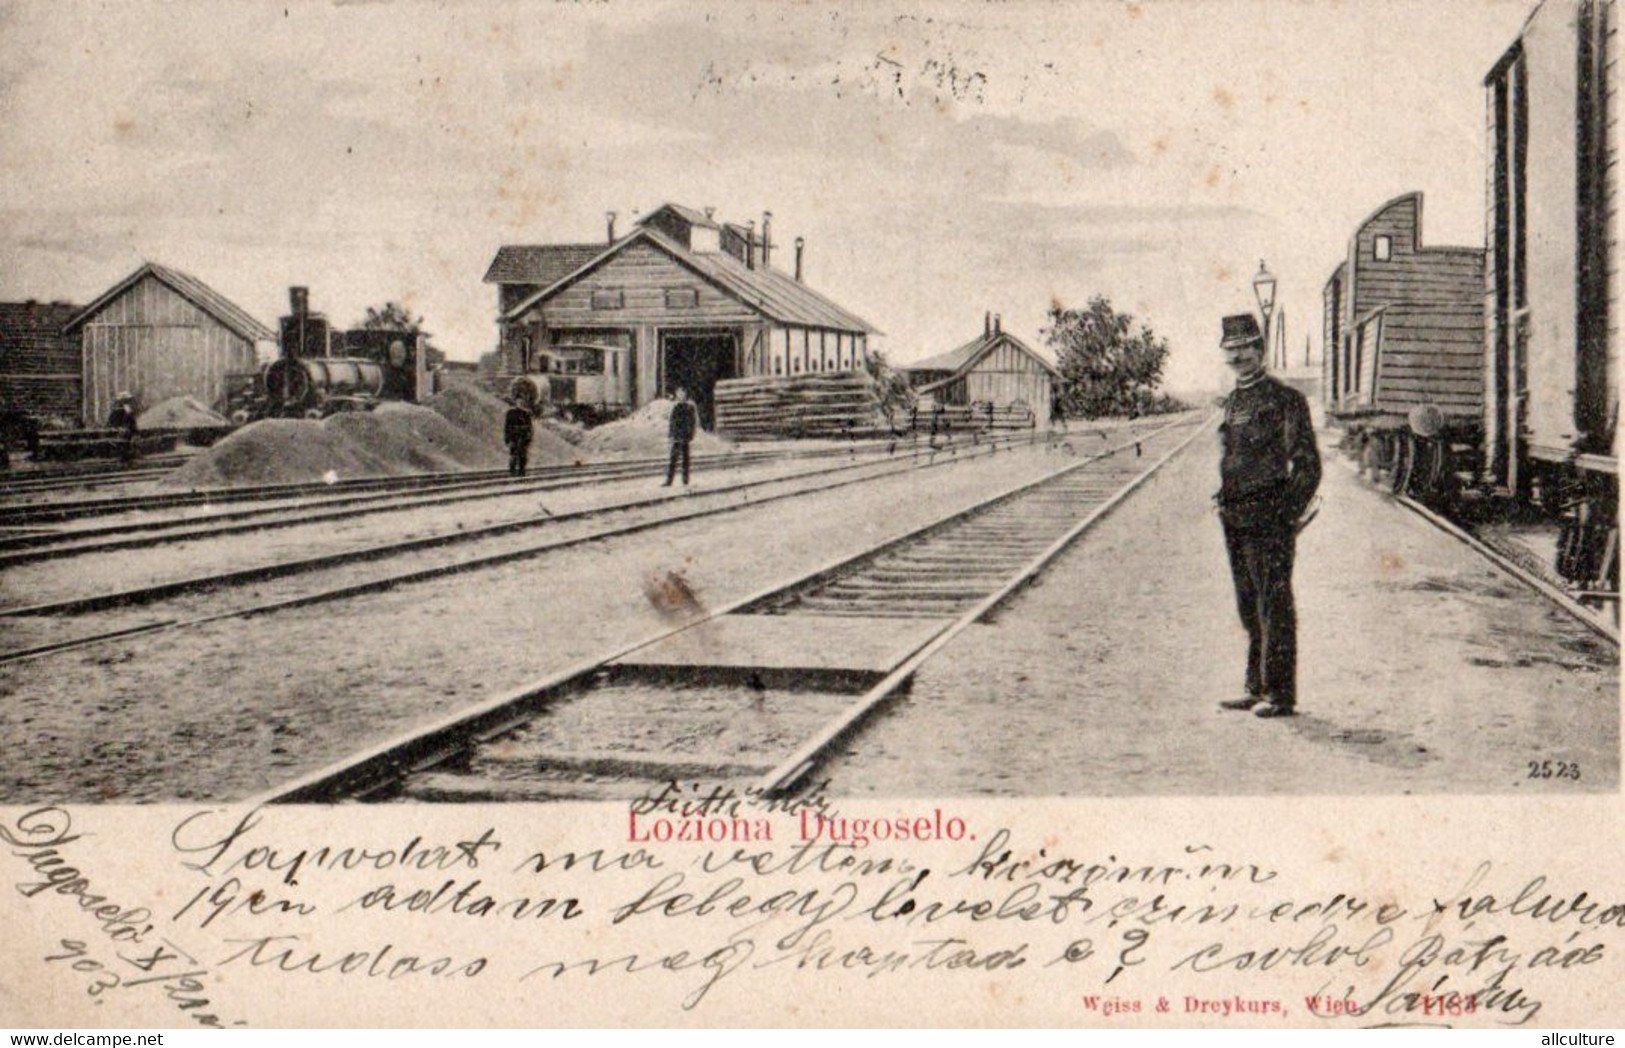 810_001 LOZIONA DUGO SELO TRAIN STATION LEVELEZO LAP DOPISNICA 1903 POSTCARD USED.jpg